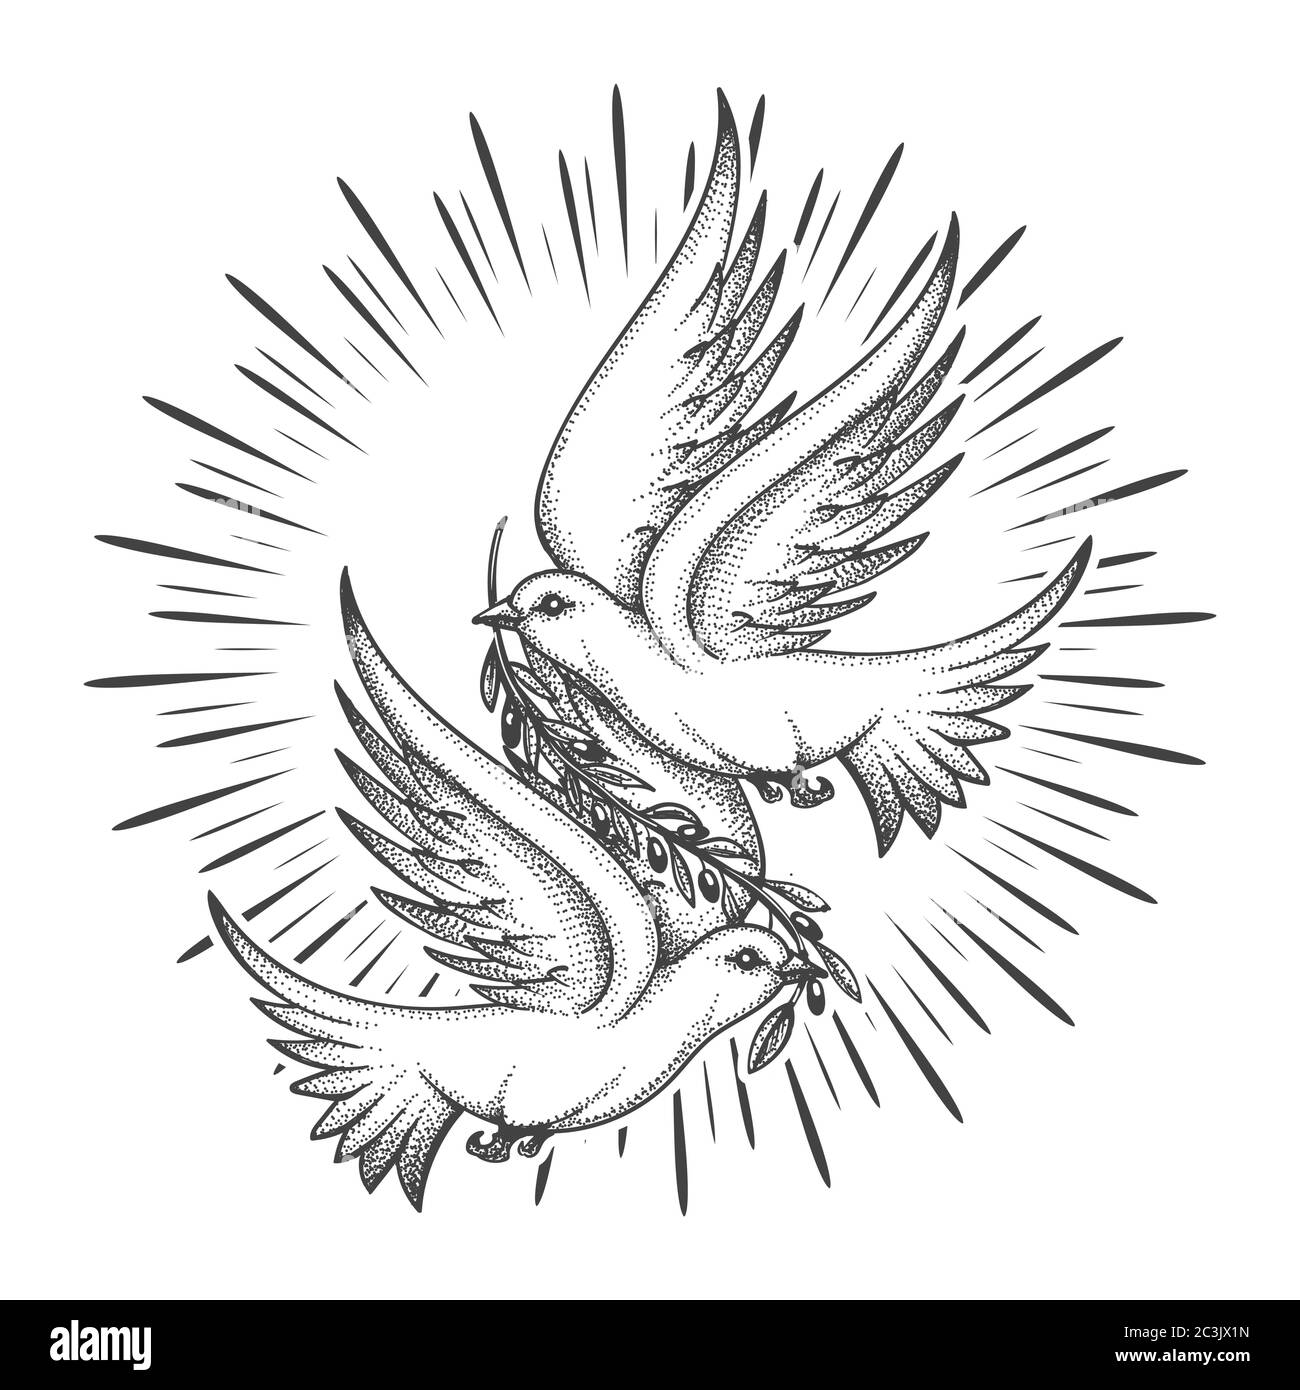 Pigeon Tattoo Design Images Pigeon Ink Design Ideas  Pigeon tattoo  Tattoos Tattoo designs